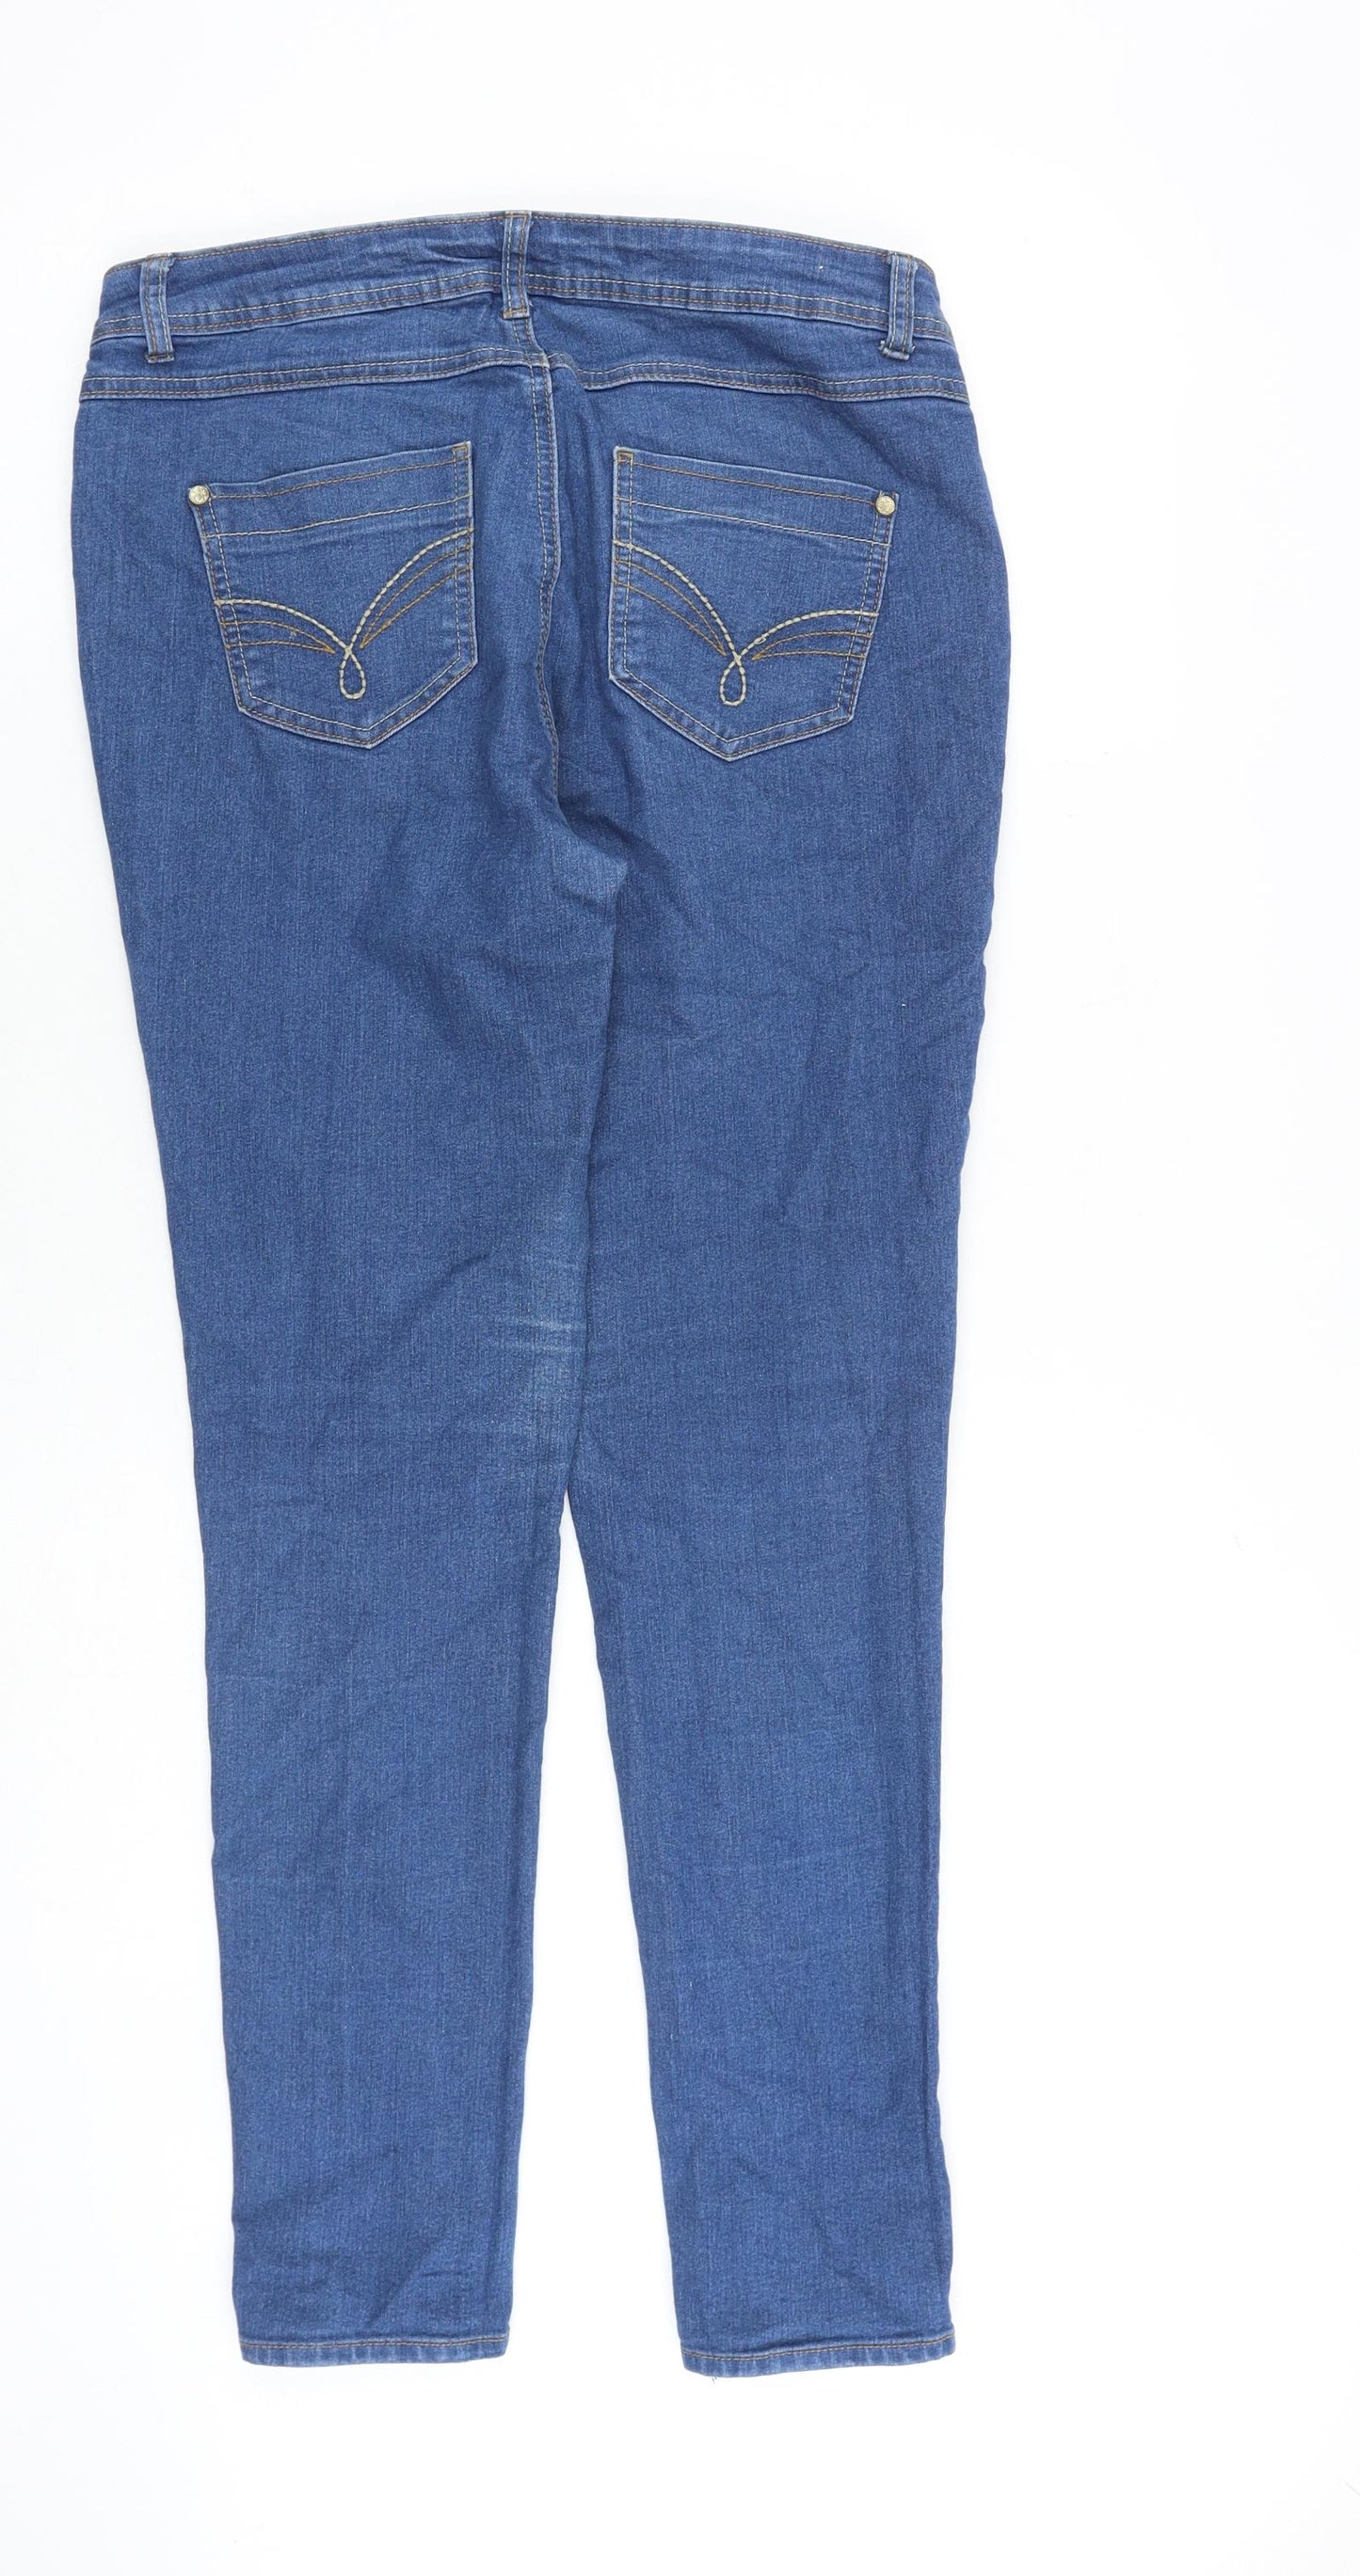 Denim & Co. Womens Blue Cotton Skinny Jeans Size 14 L29 in Slim Zip